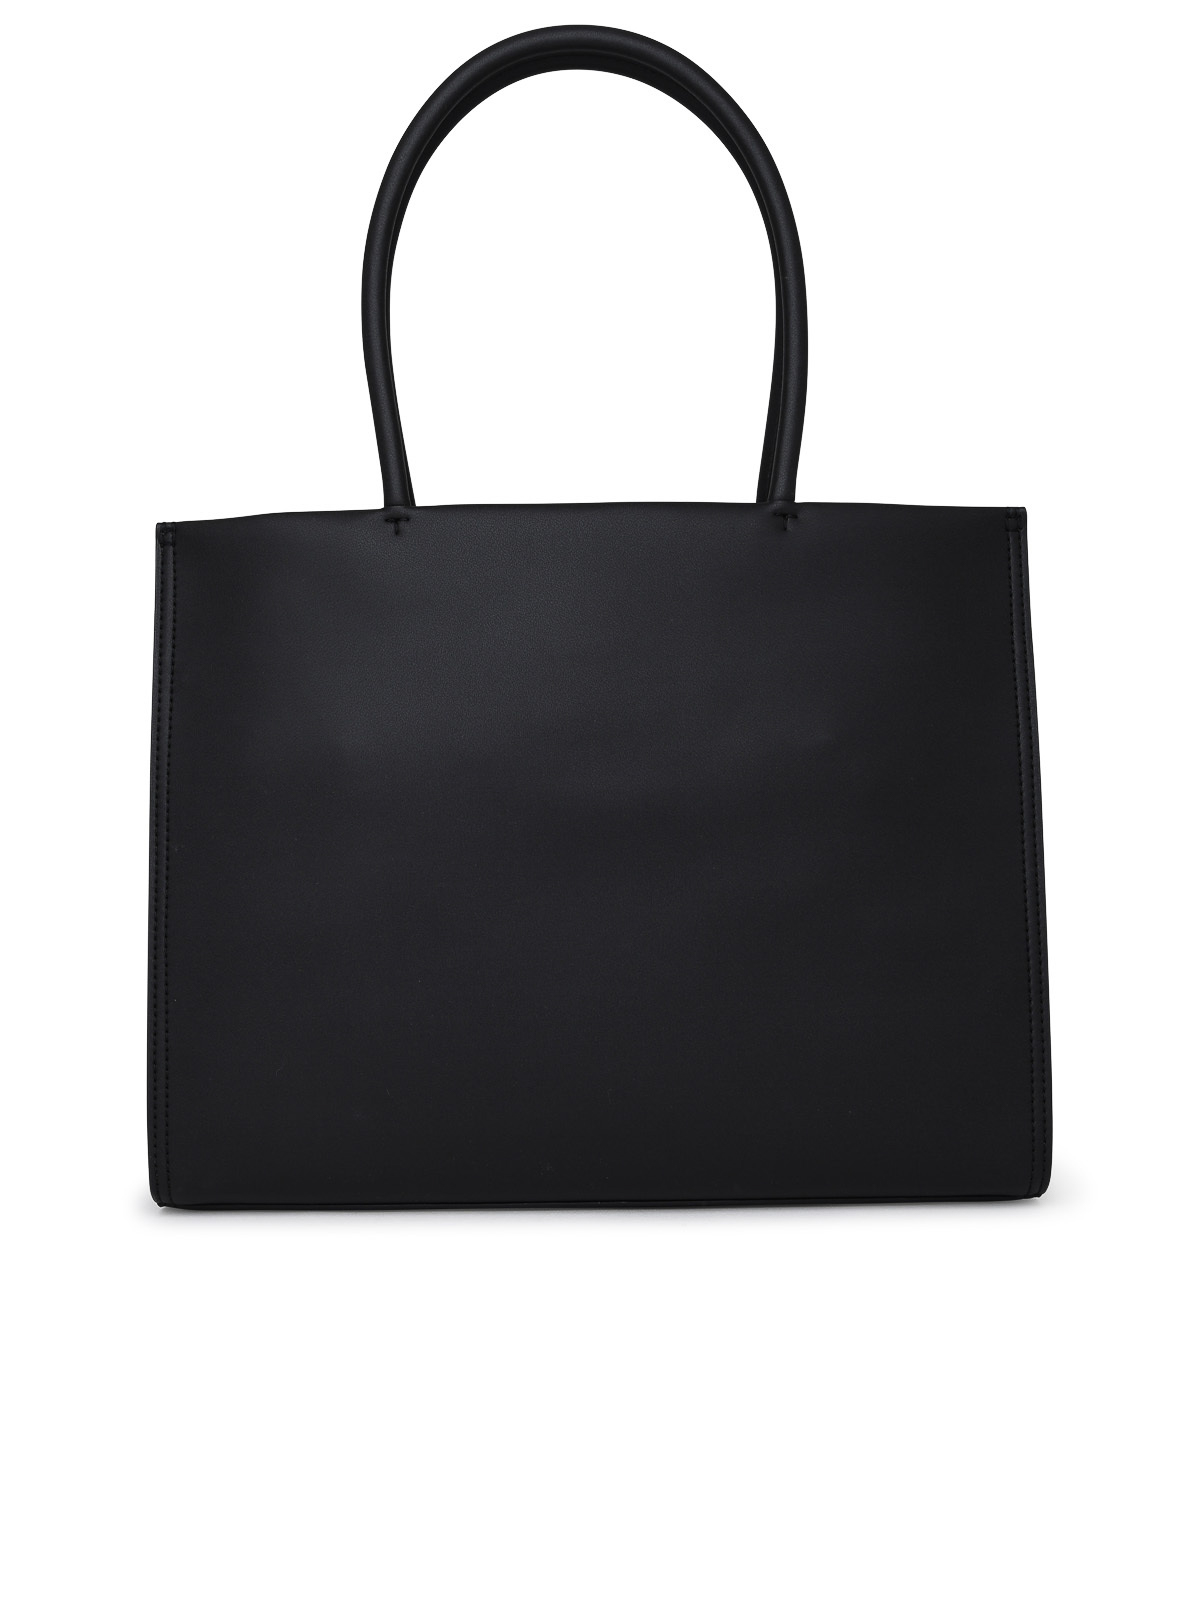 TORY BURCH: Ella leather bag - Amethyst  Tory Burch mini bag 145613 online  at